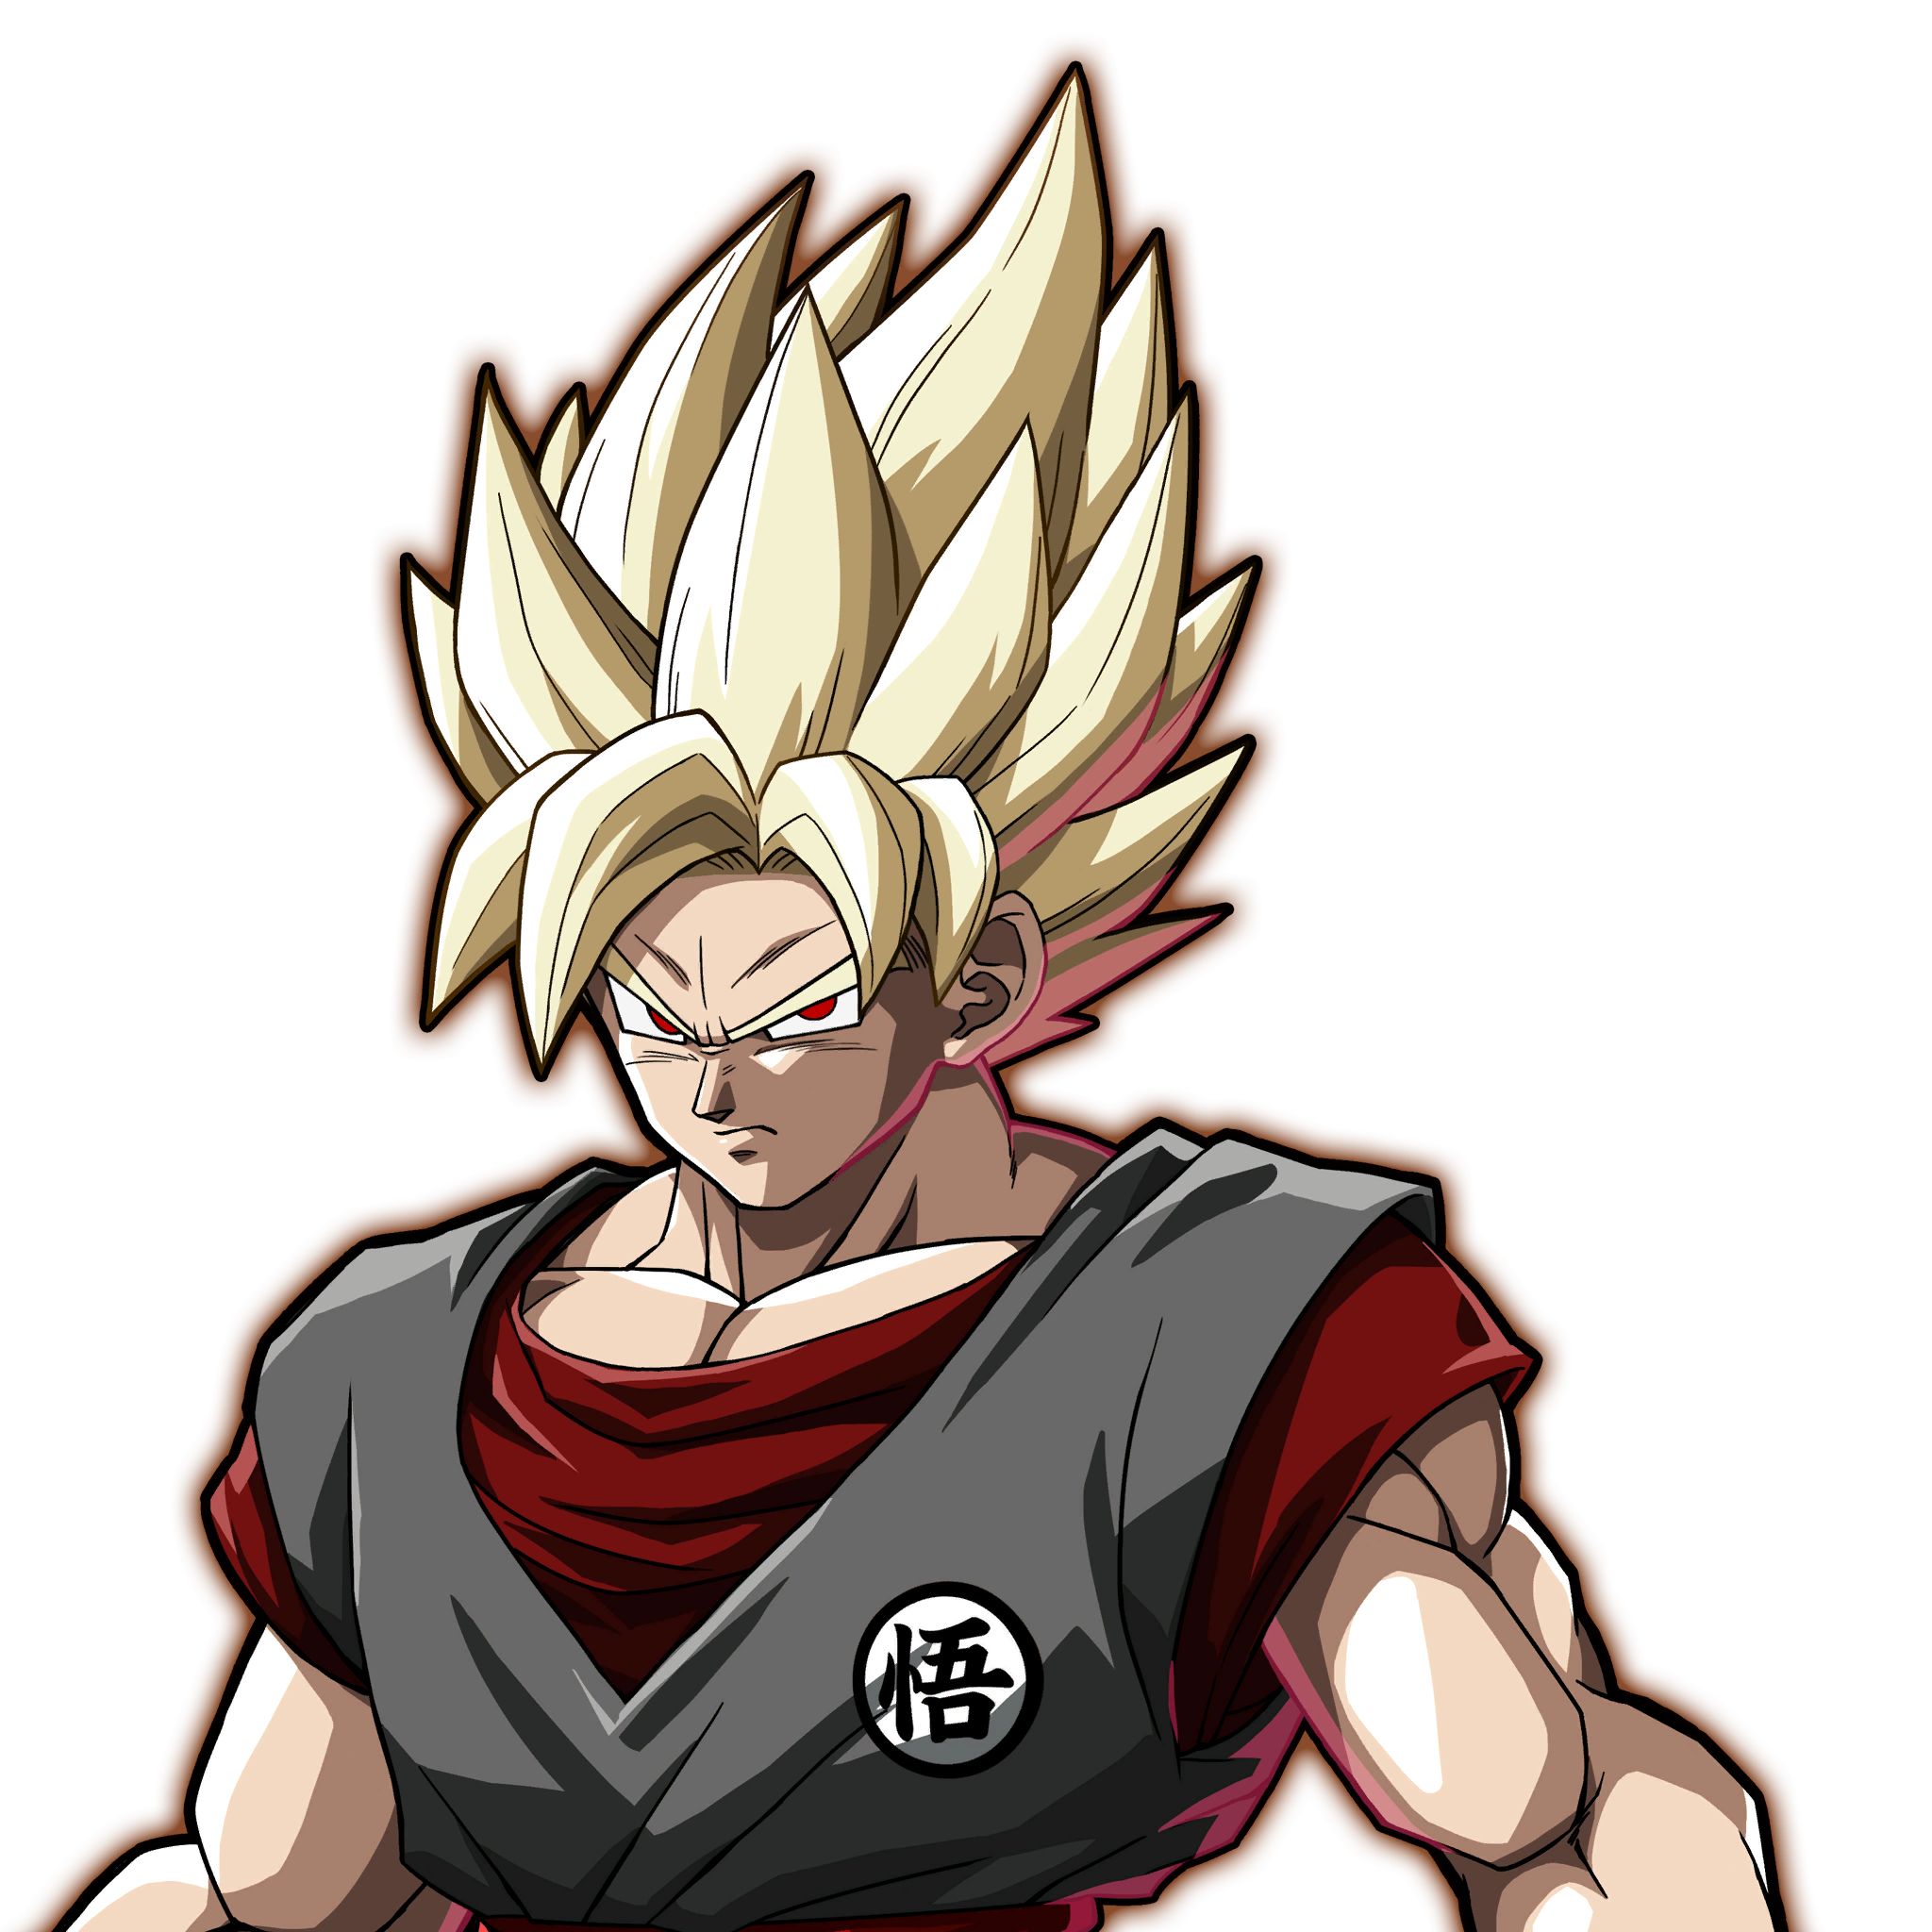 Goku (clone) - DBFZ by JLG-GG on DeviantArt